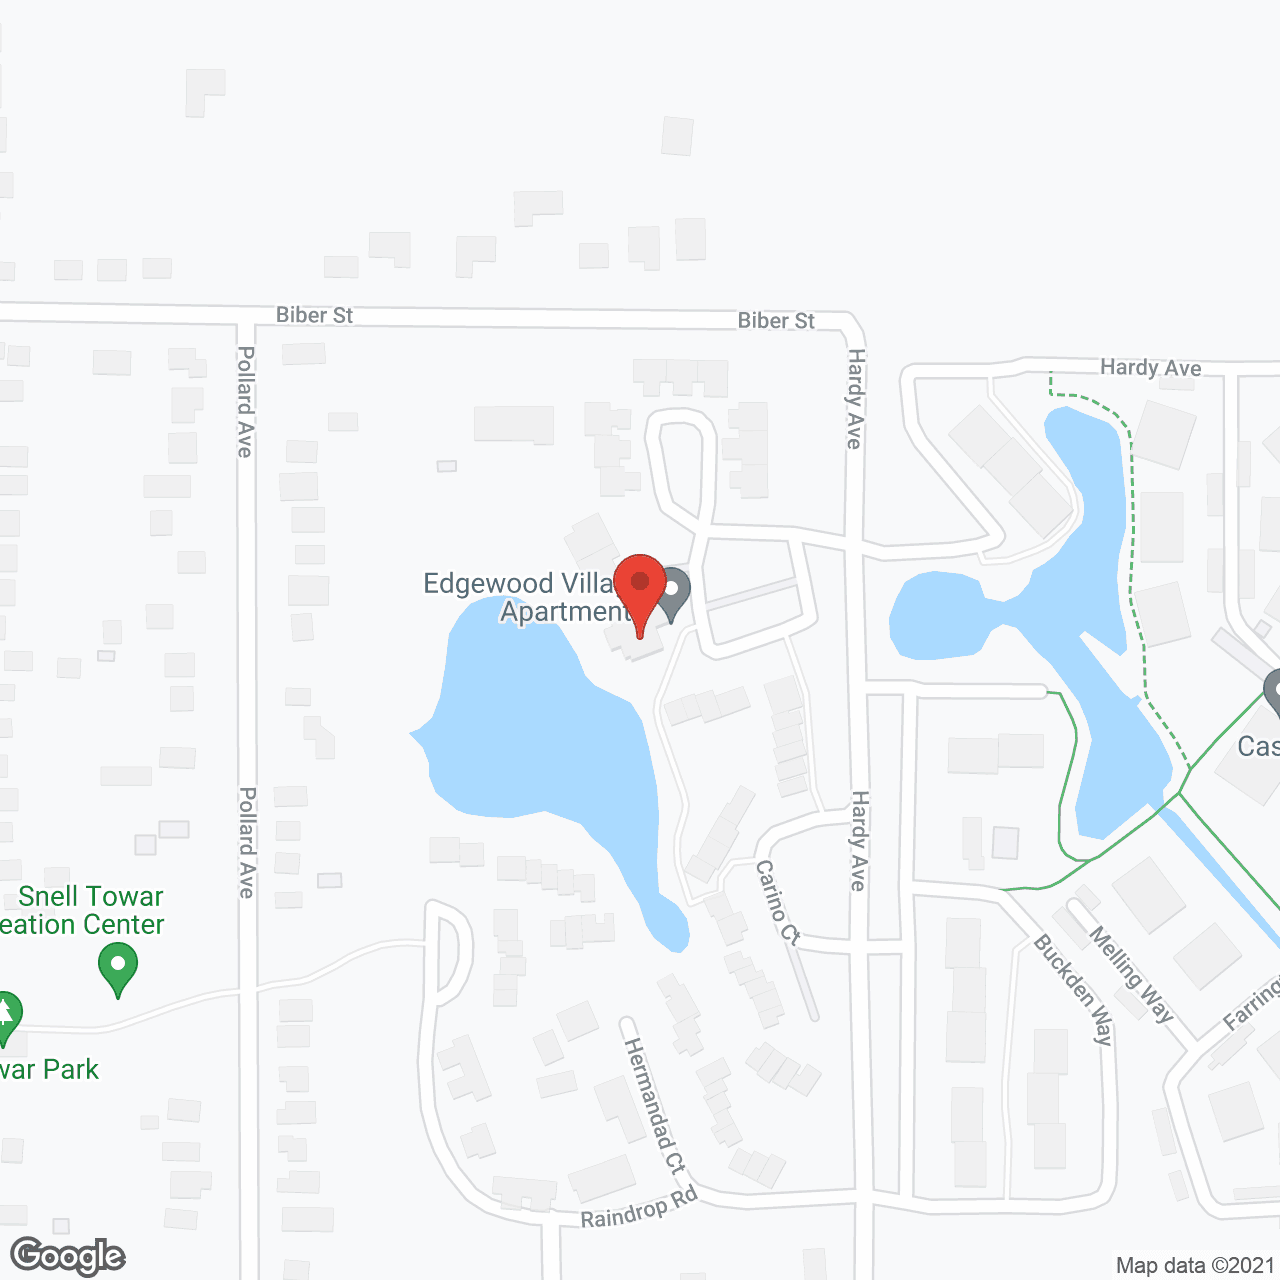 Edgewood Village Apartments in google map